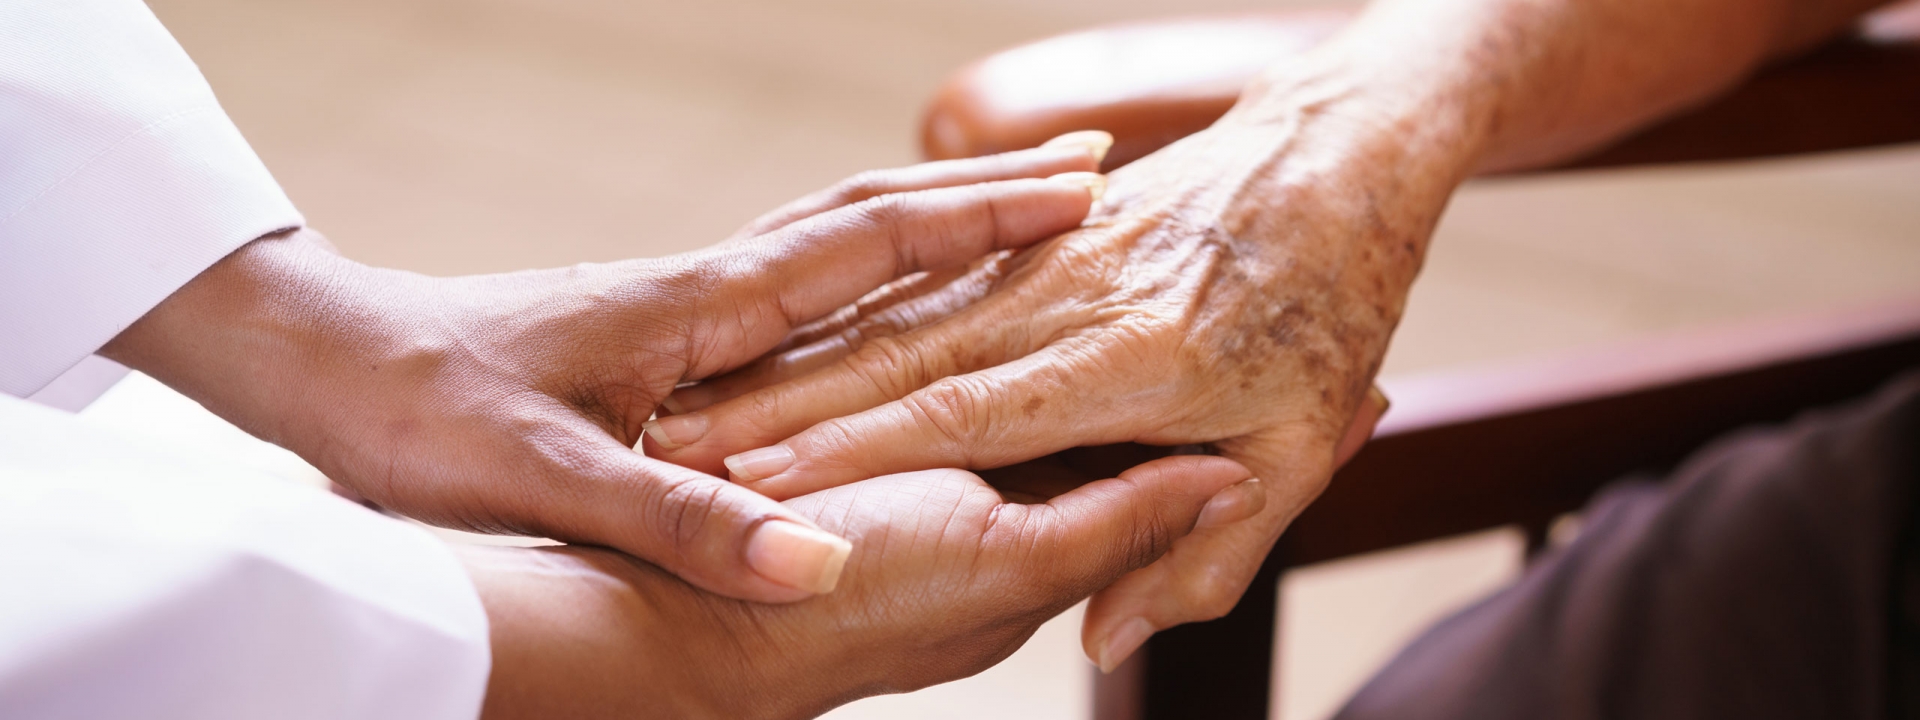 Caregiver and senior holding hands.